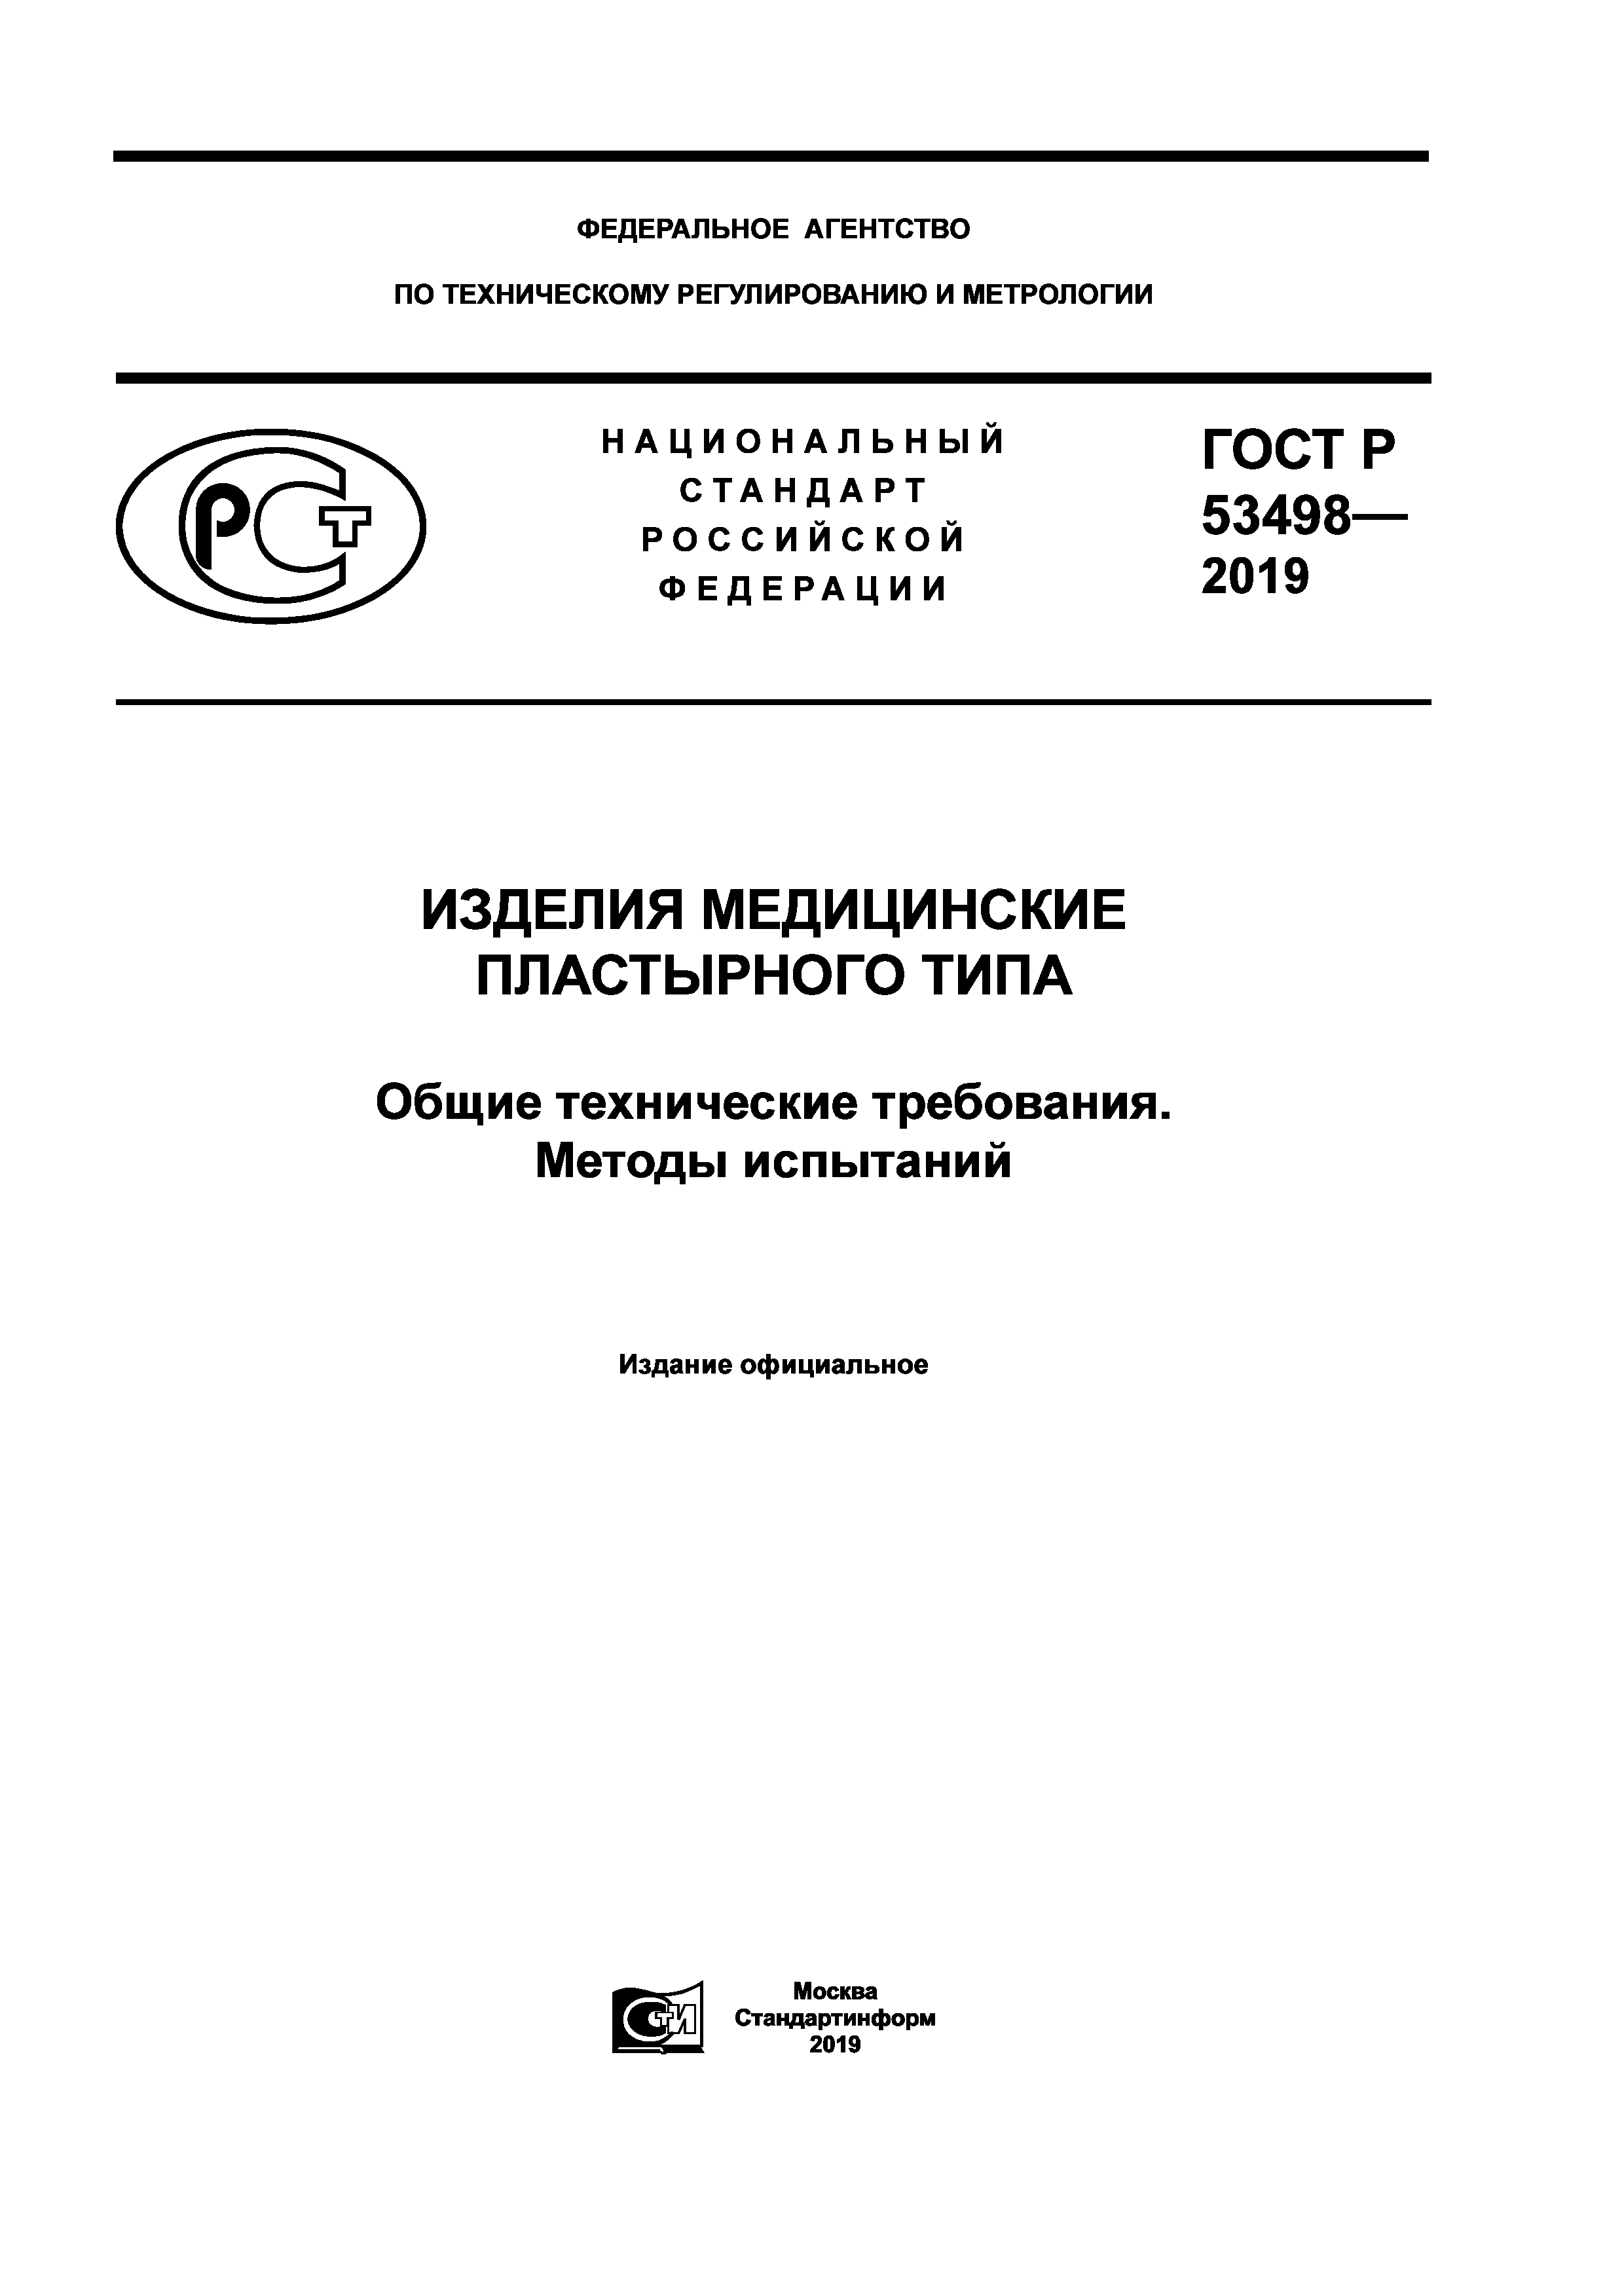 ГОСТ Р 53498-2019